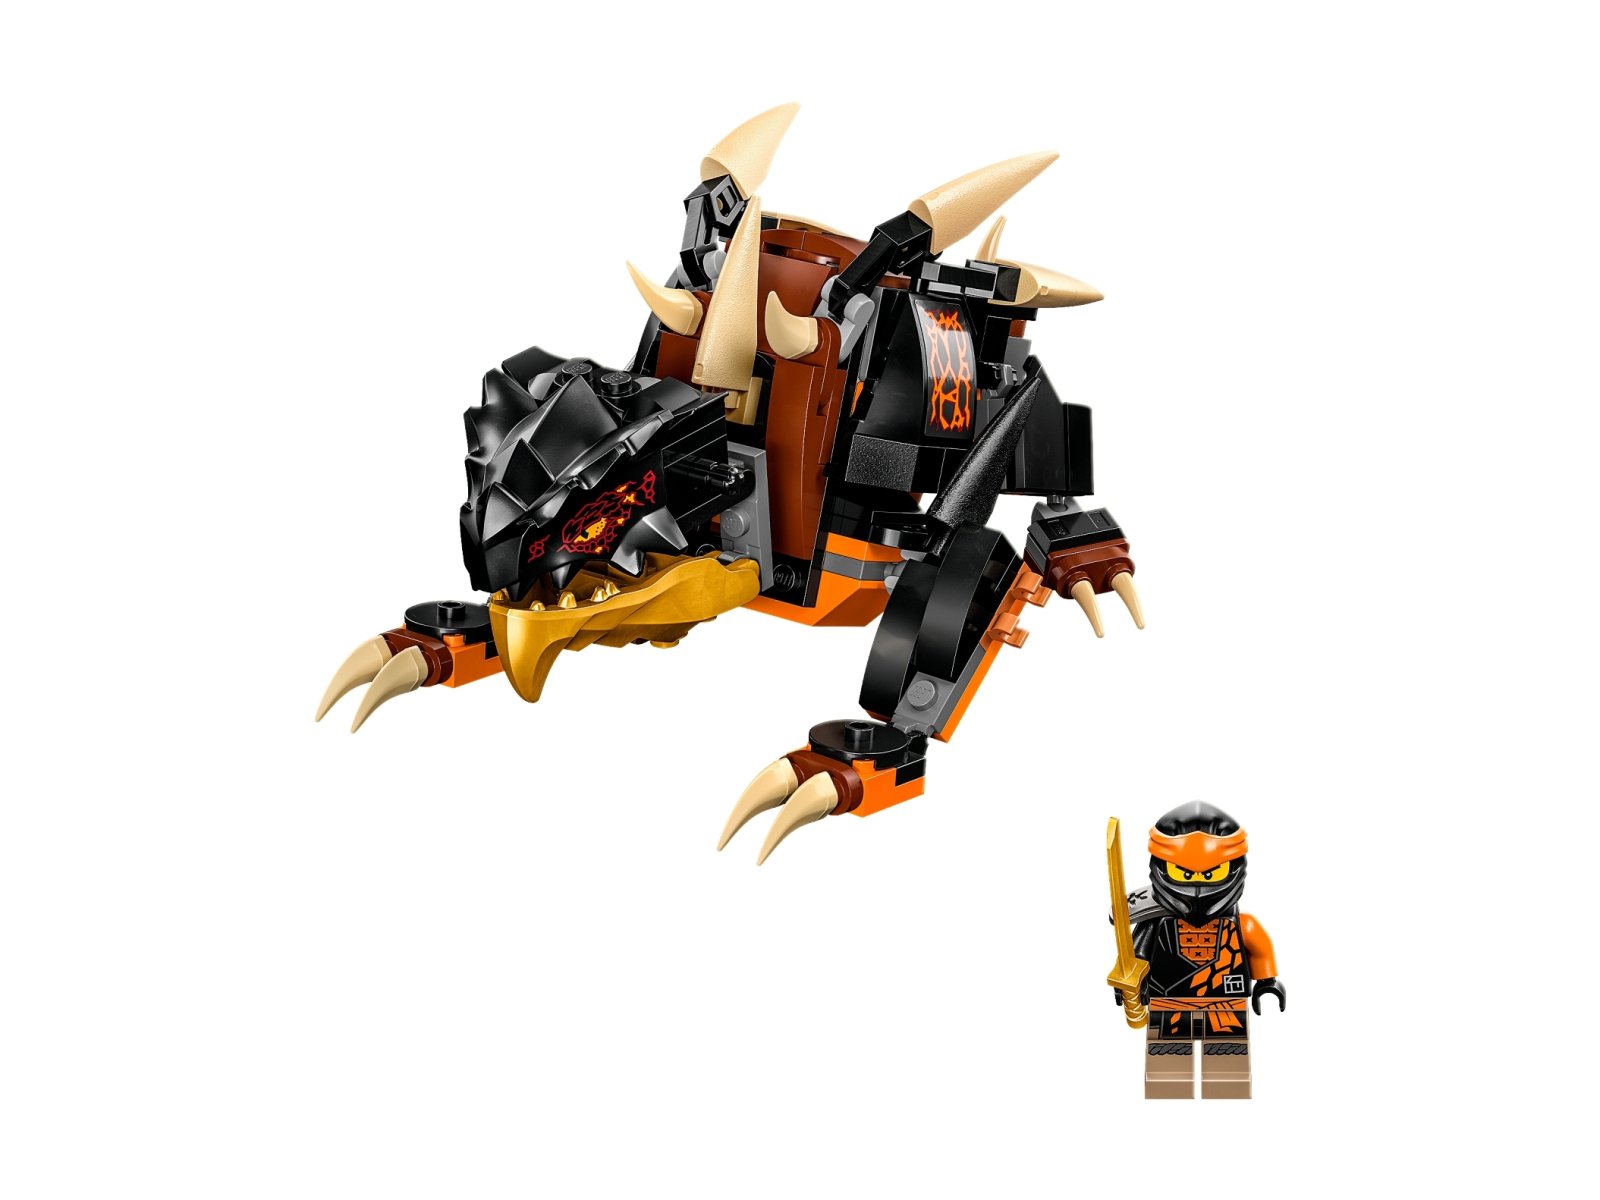 LEGO 71782 Ninjago Smok Ziemi Cole'a EVO